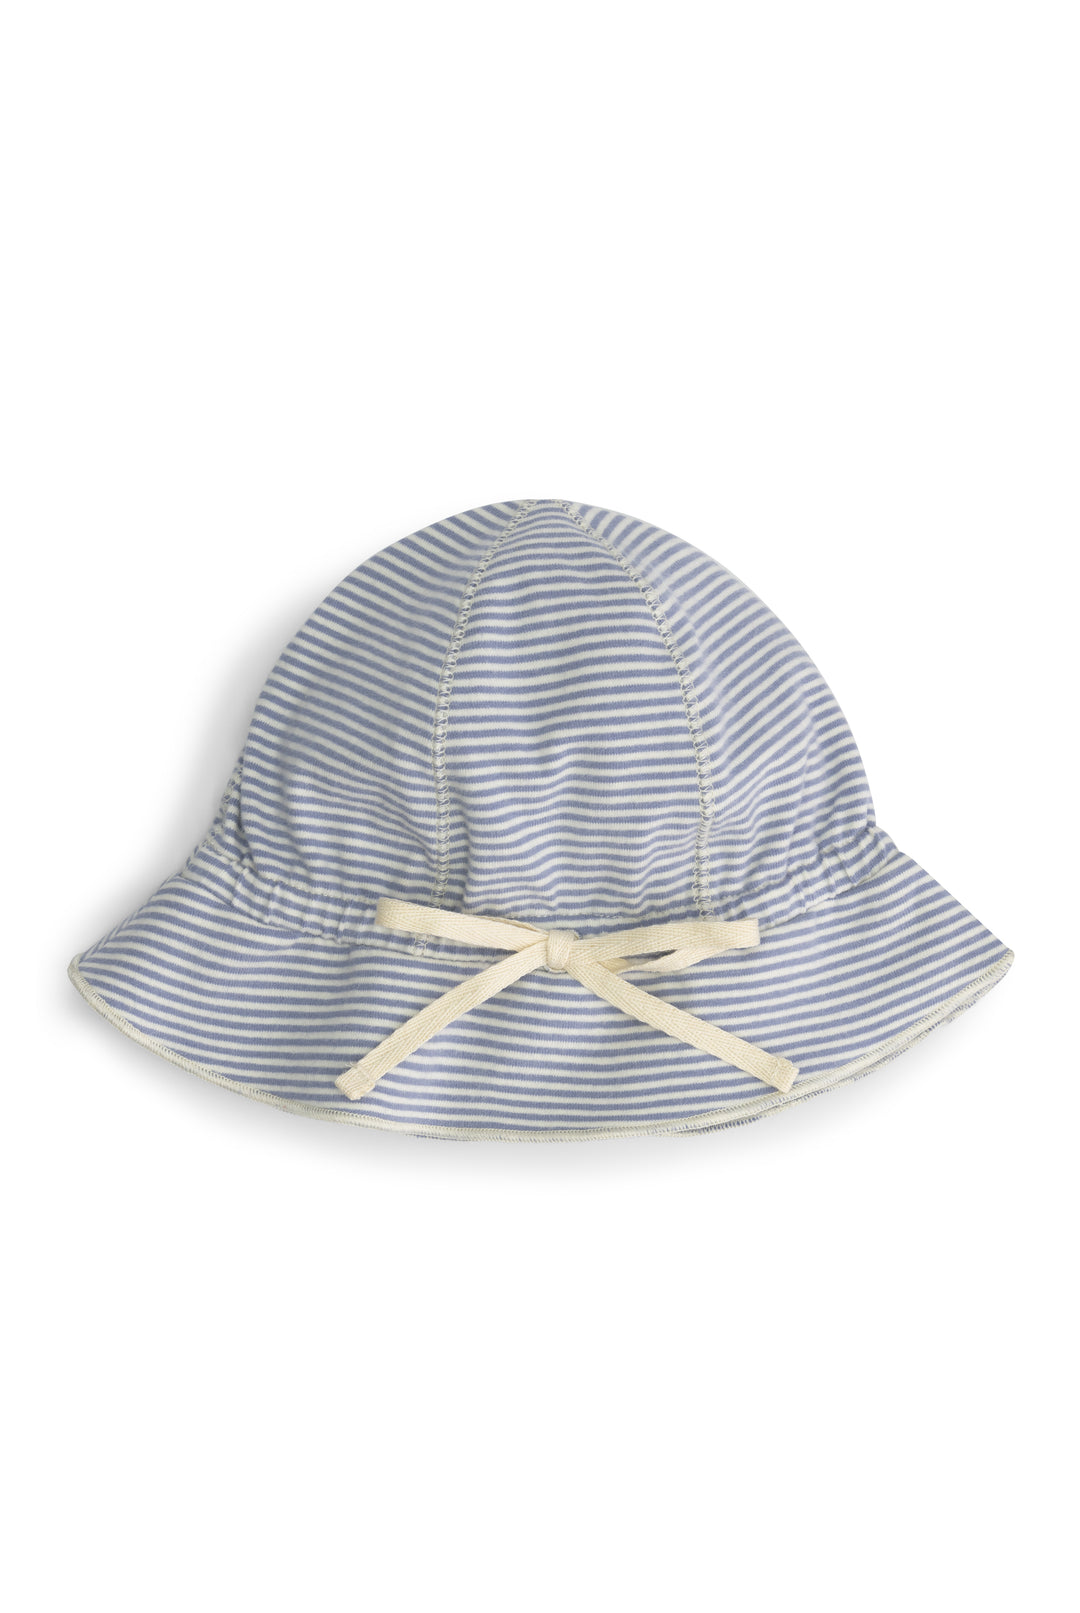 Gray Label Baby Sun Hat, Lavender/Cream